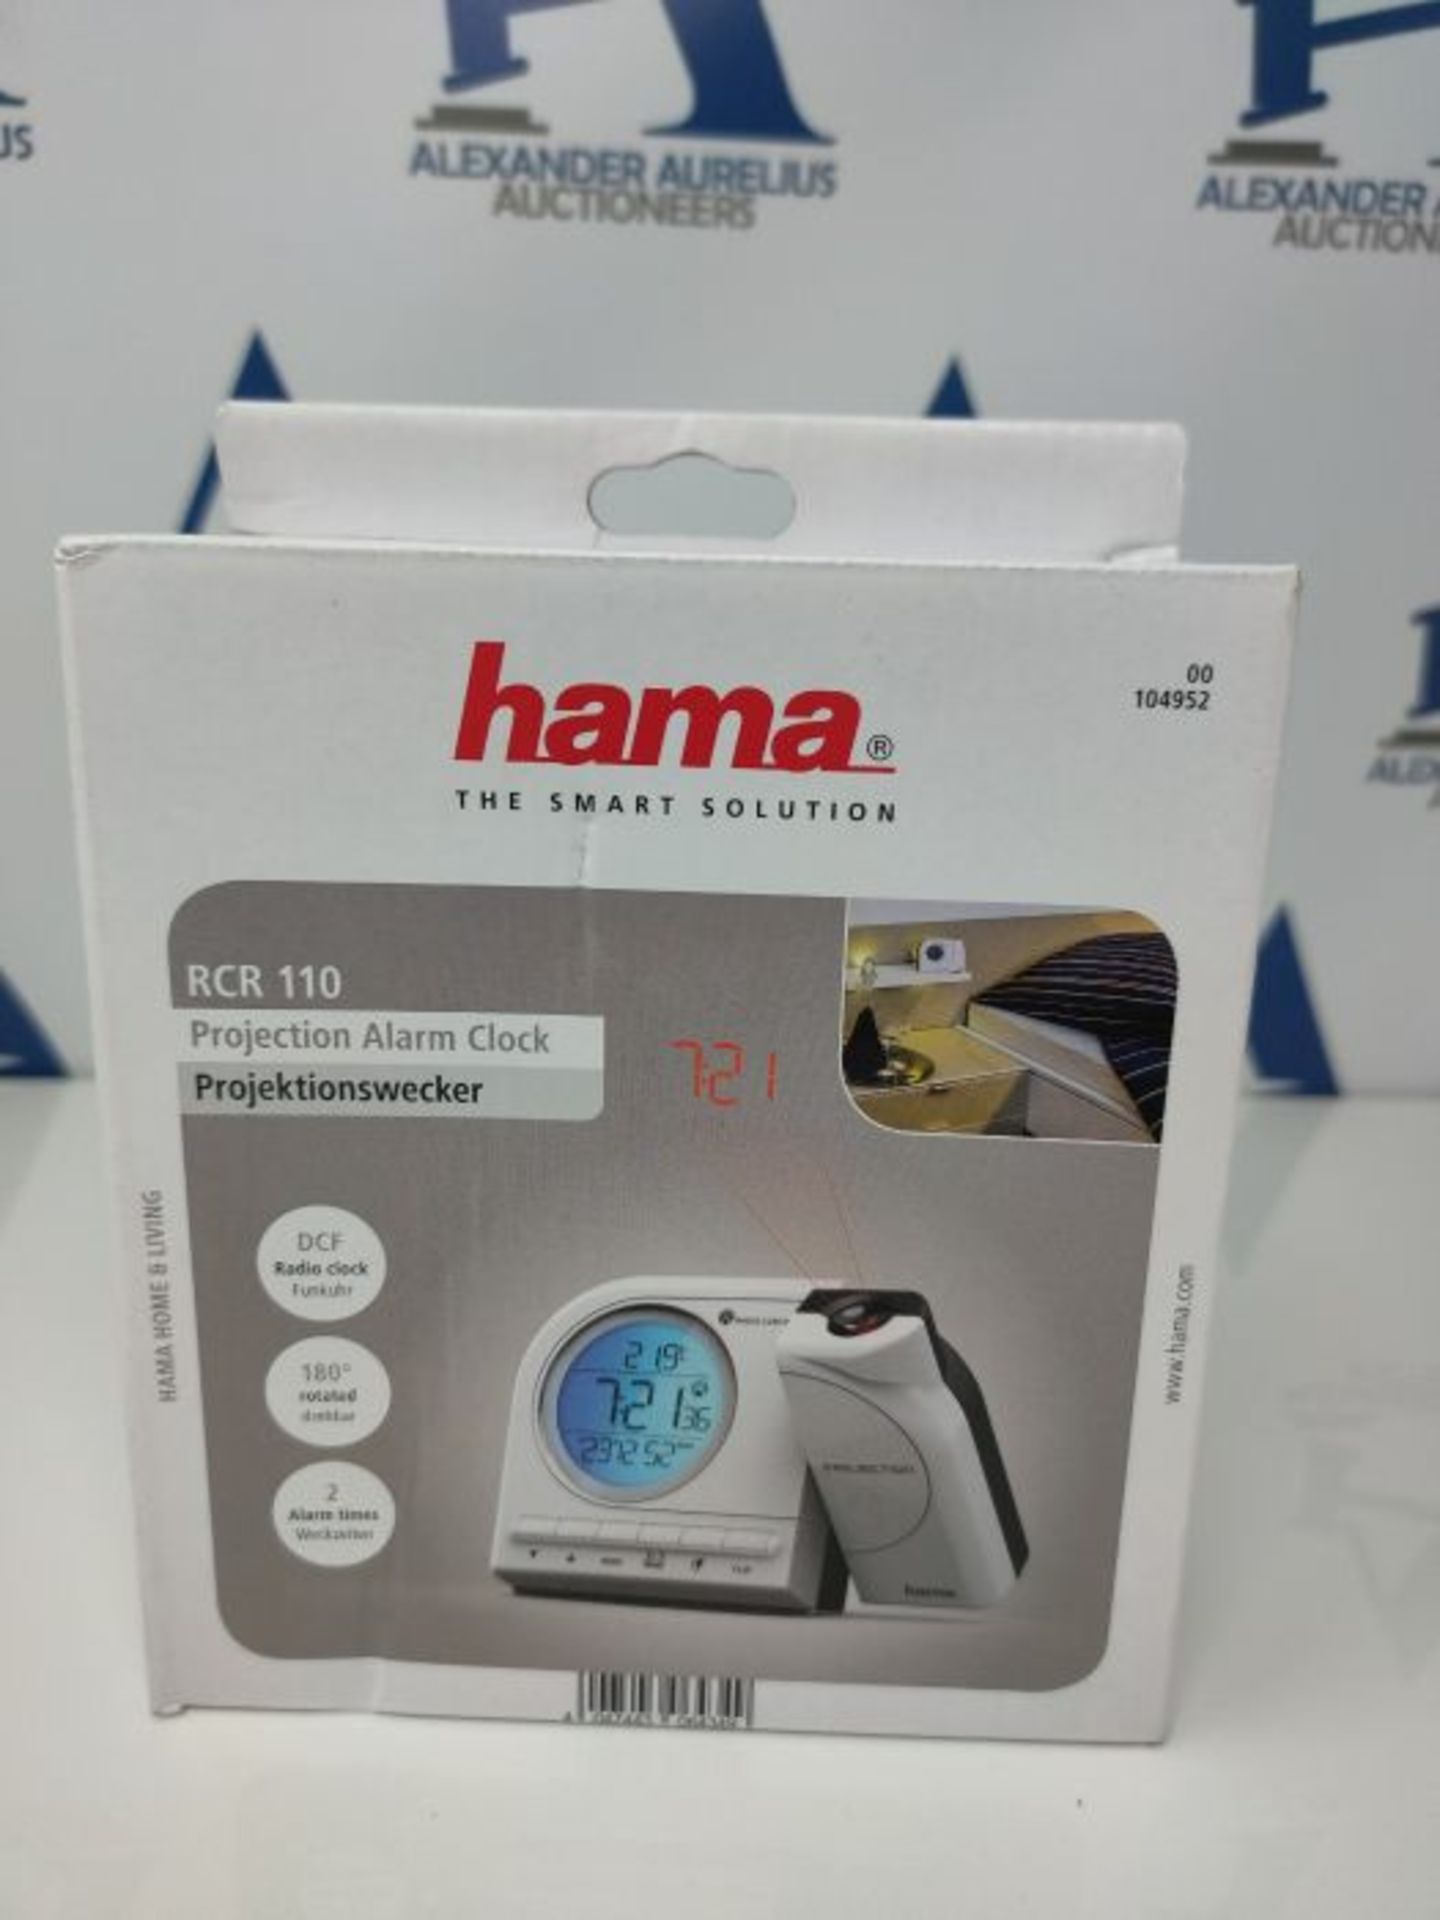 Hama "RCR 110" Projection Alarm Clock - Image 2 of 3